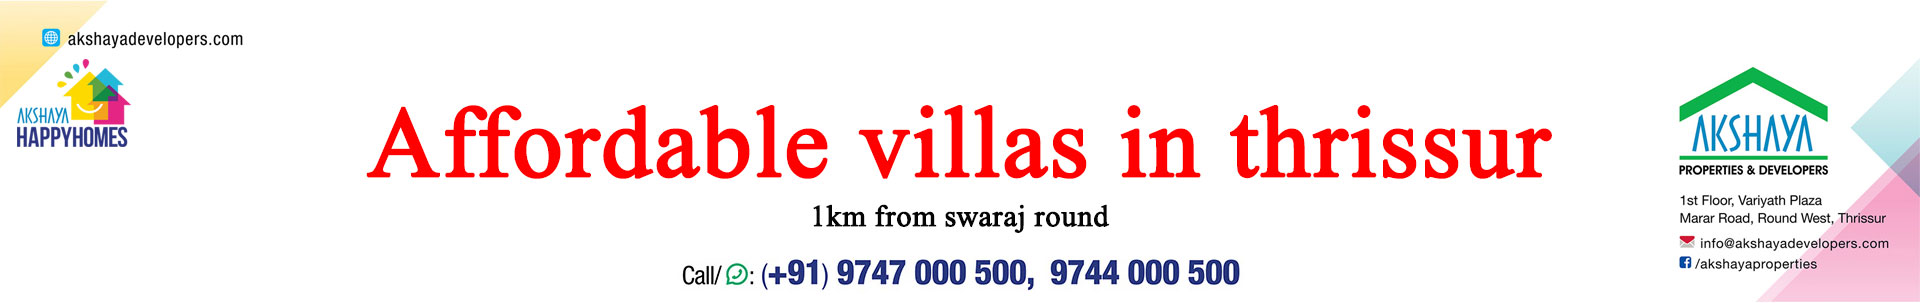 affordable villas in thrissur